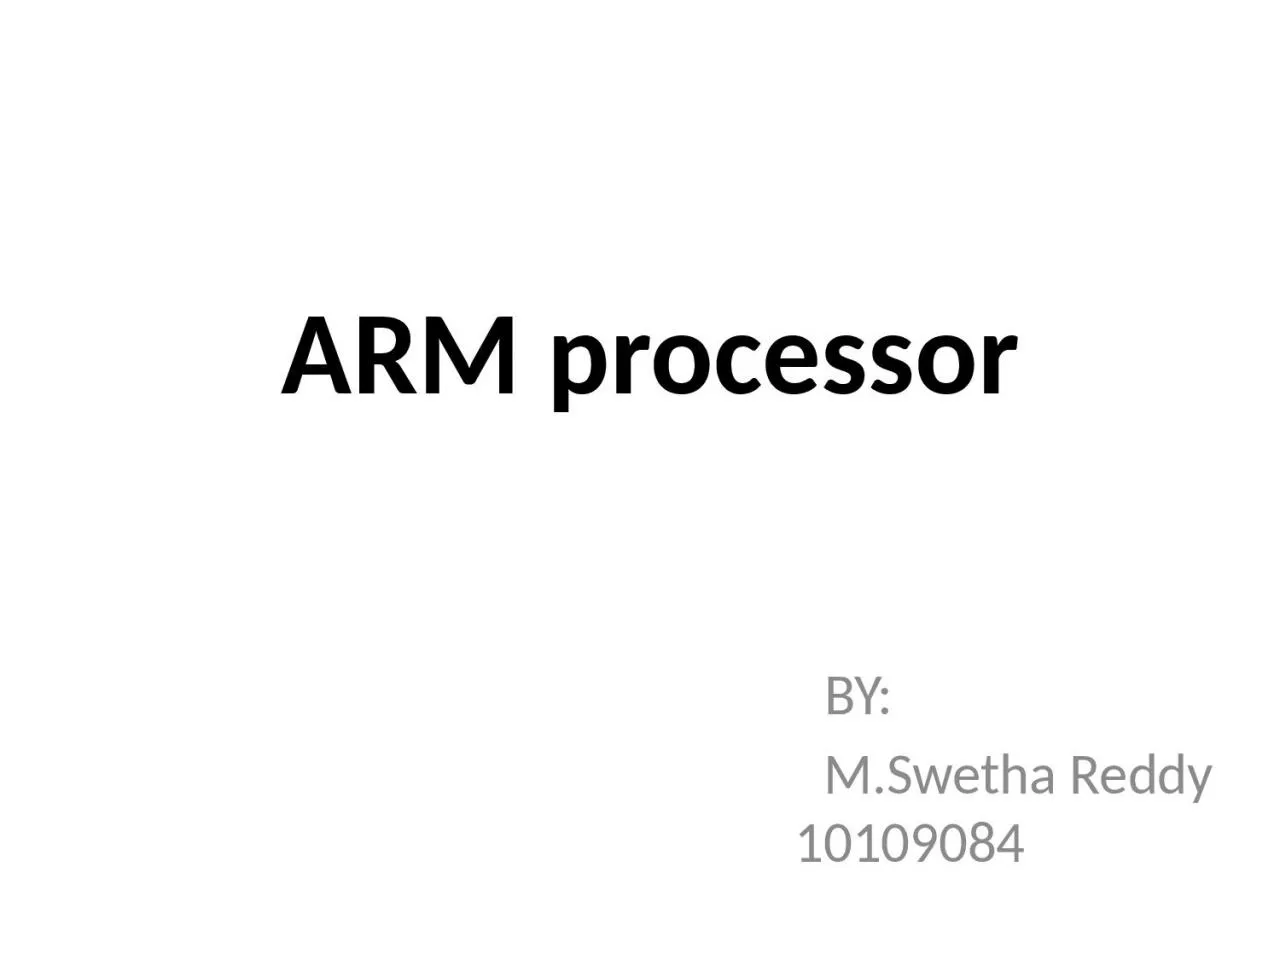 ARM processor BY: